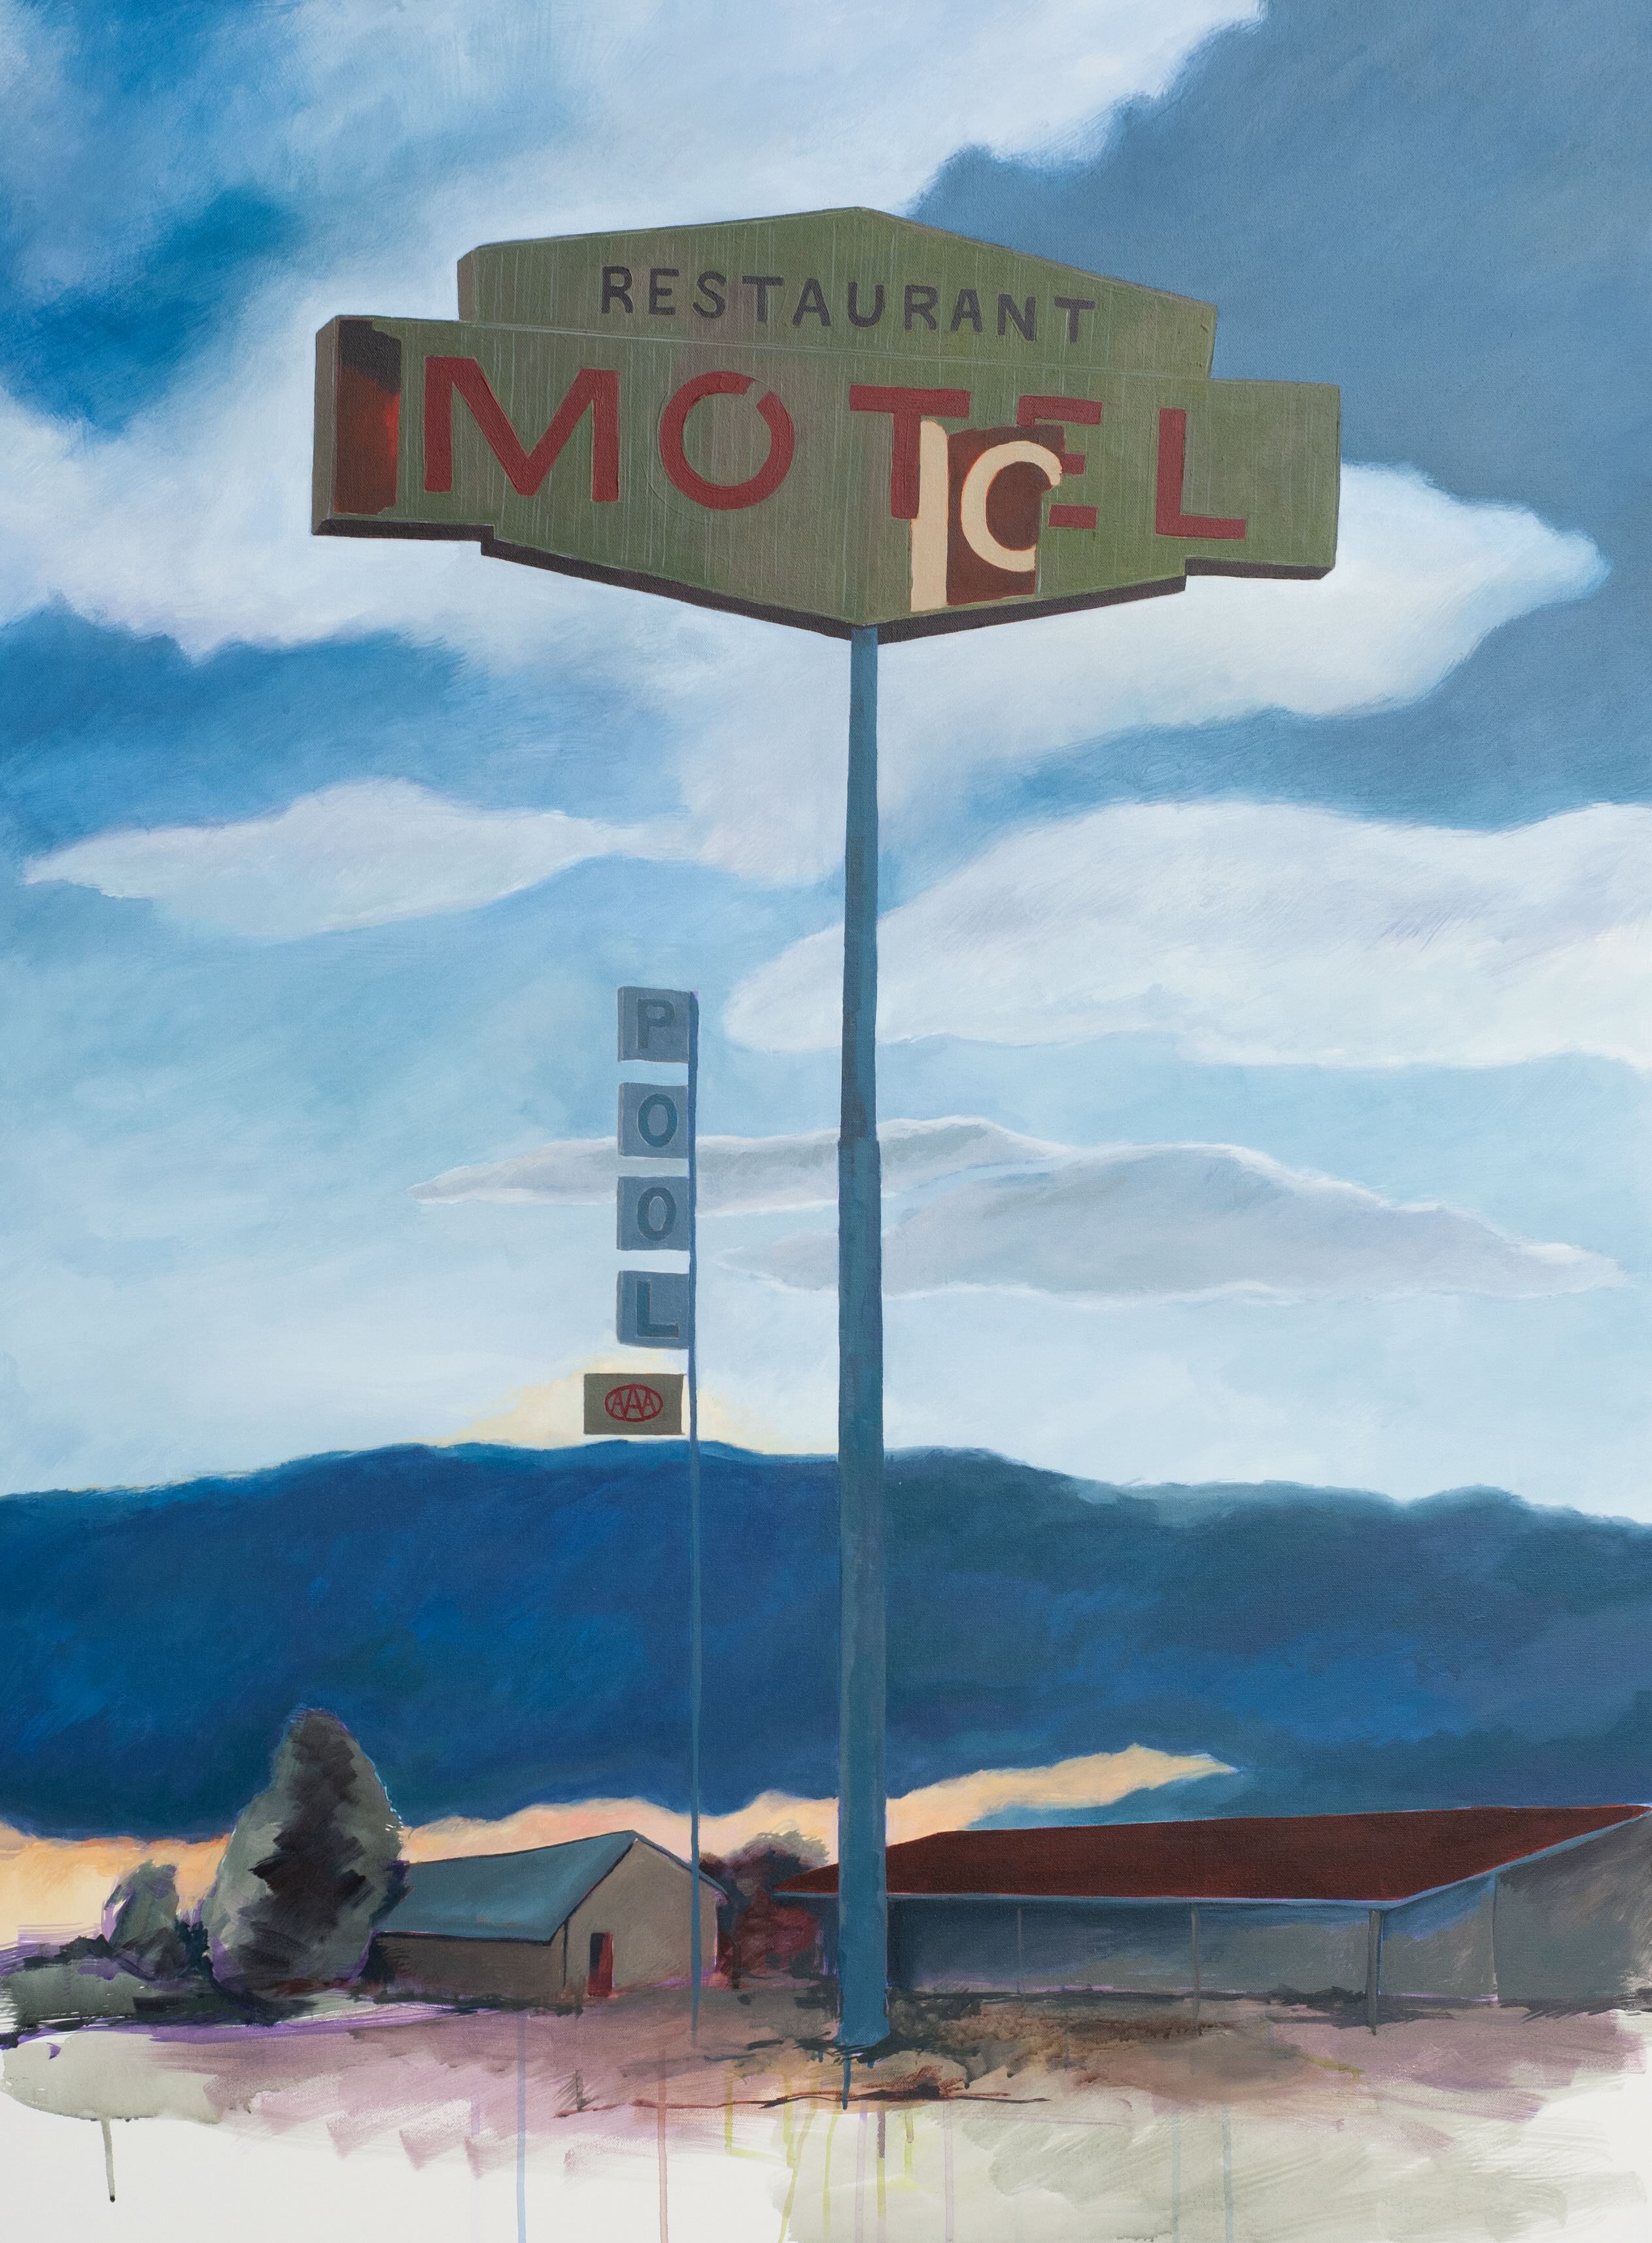 a dilapidated motel sign on a barren landscape